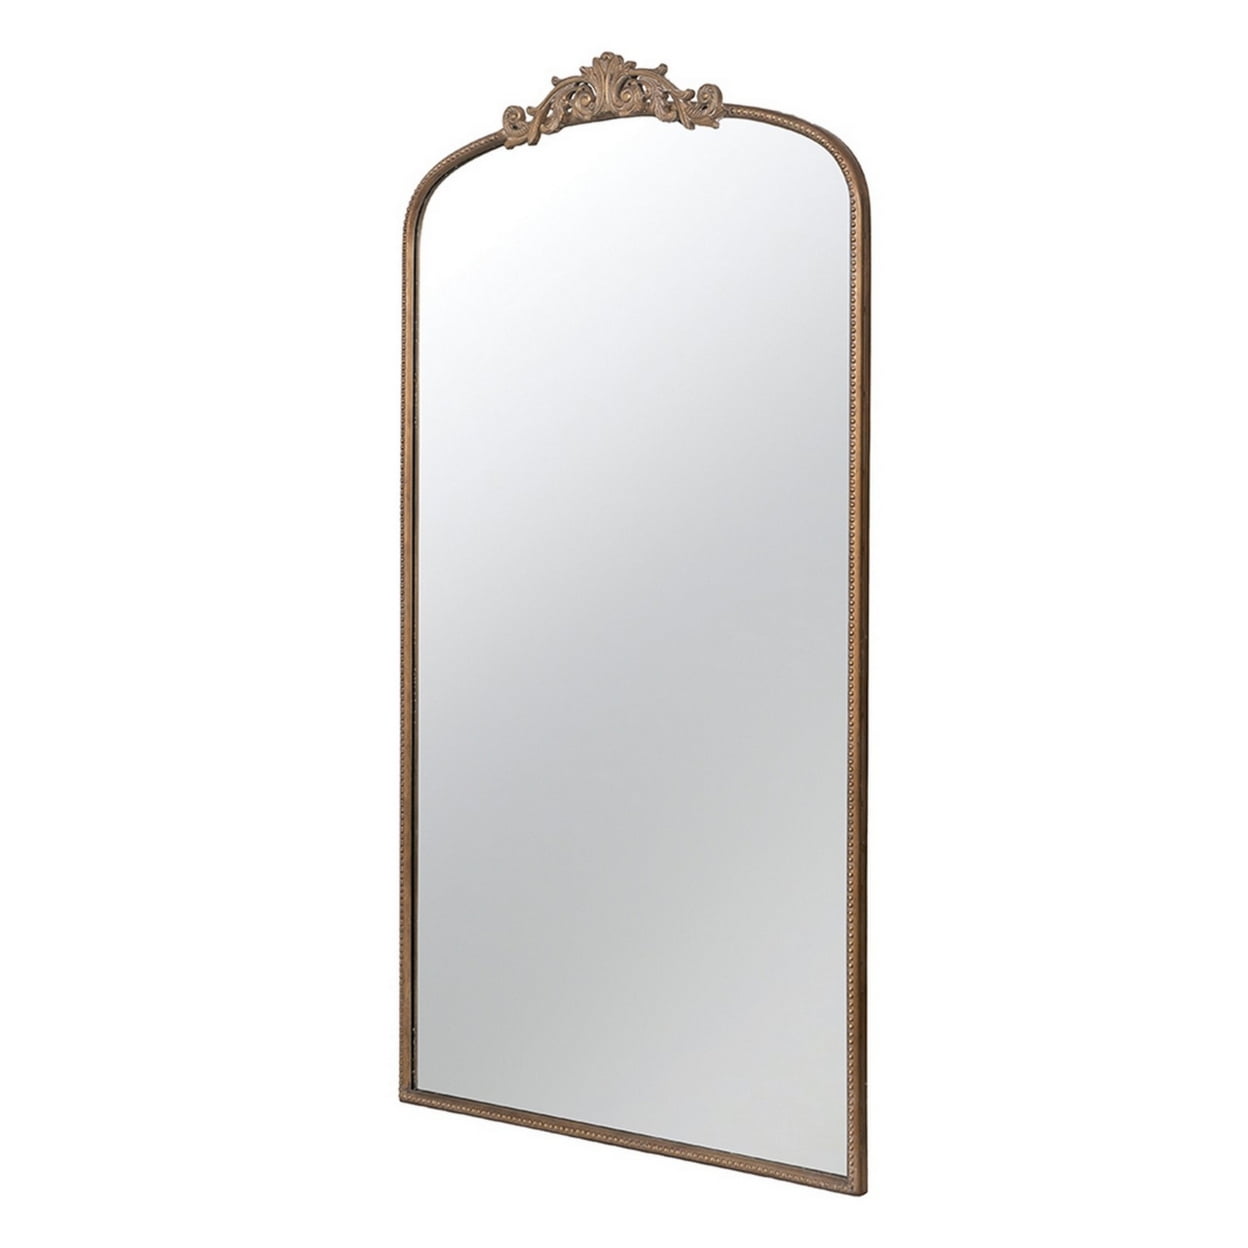  Qiveno Gold Mirror Frame Peel and Stick(Mirror-Like